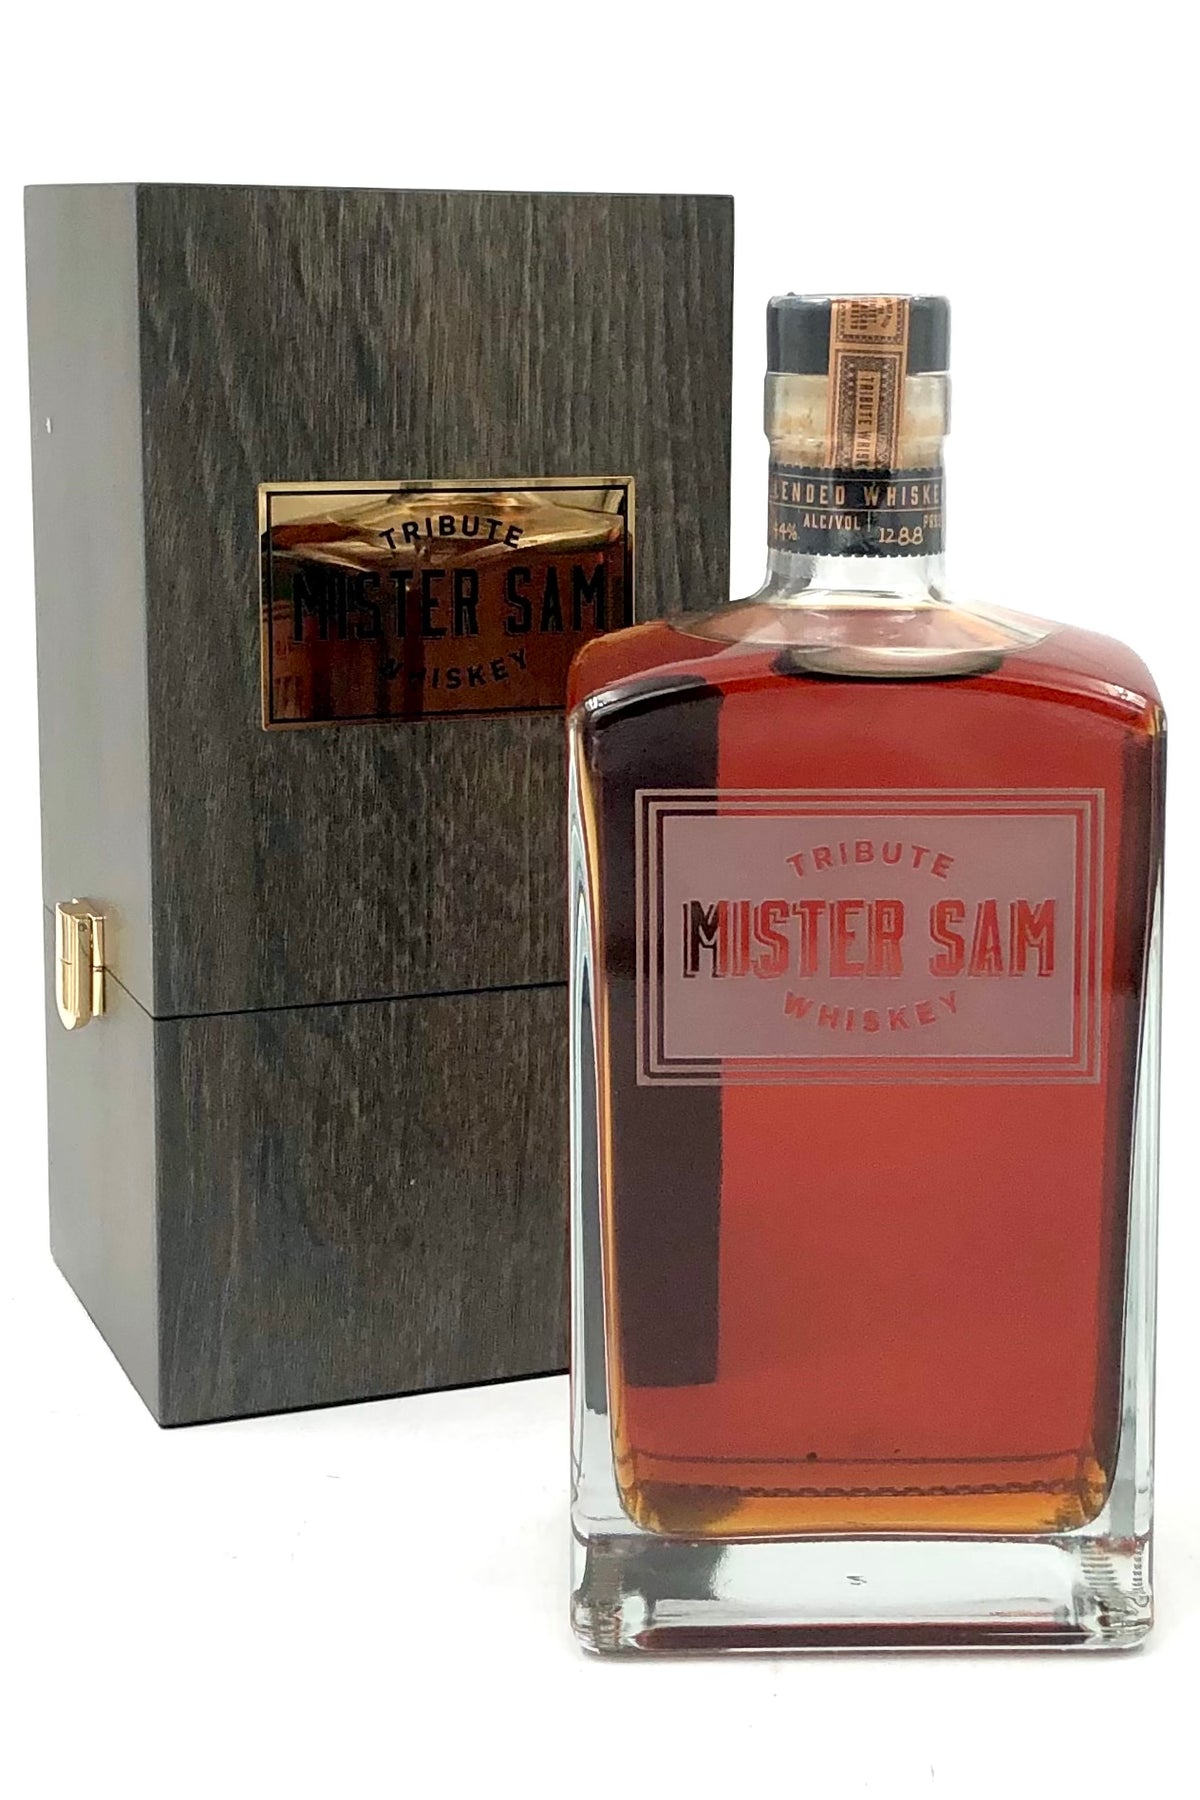 Mister Sam Tribute Canadian Whiskey